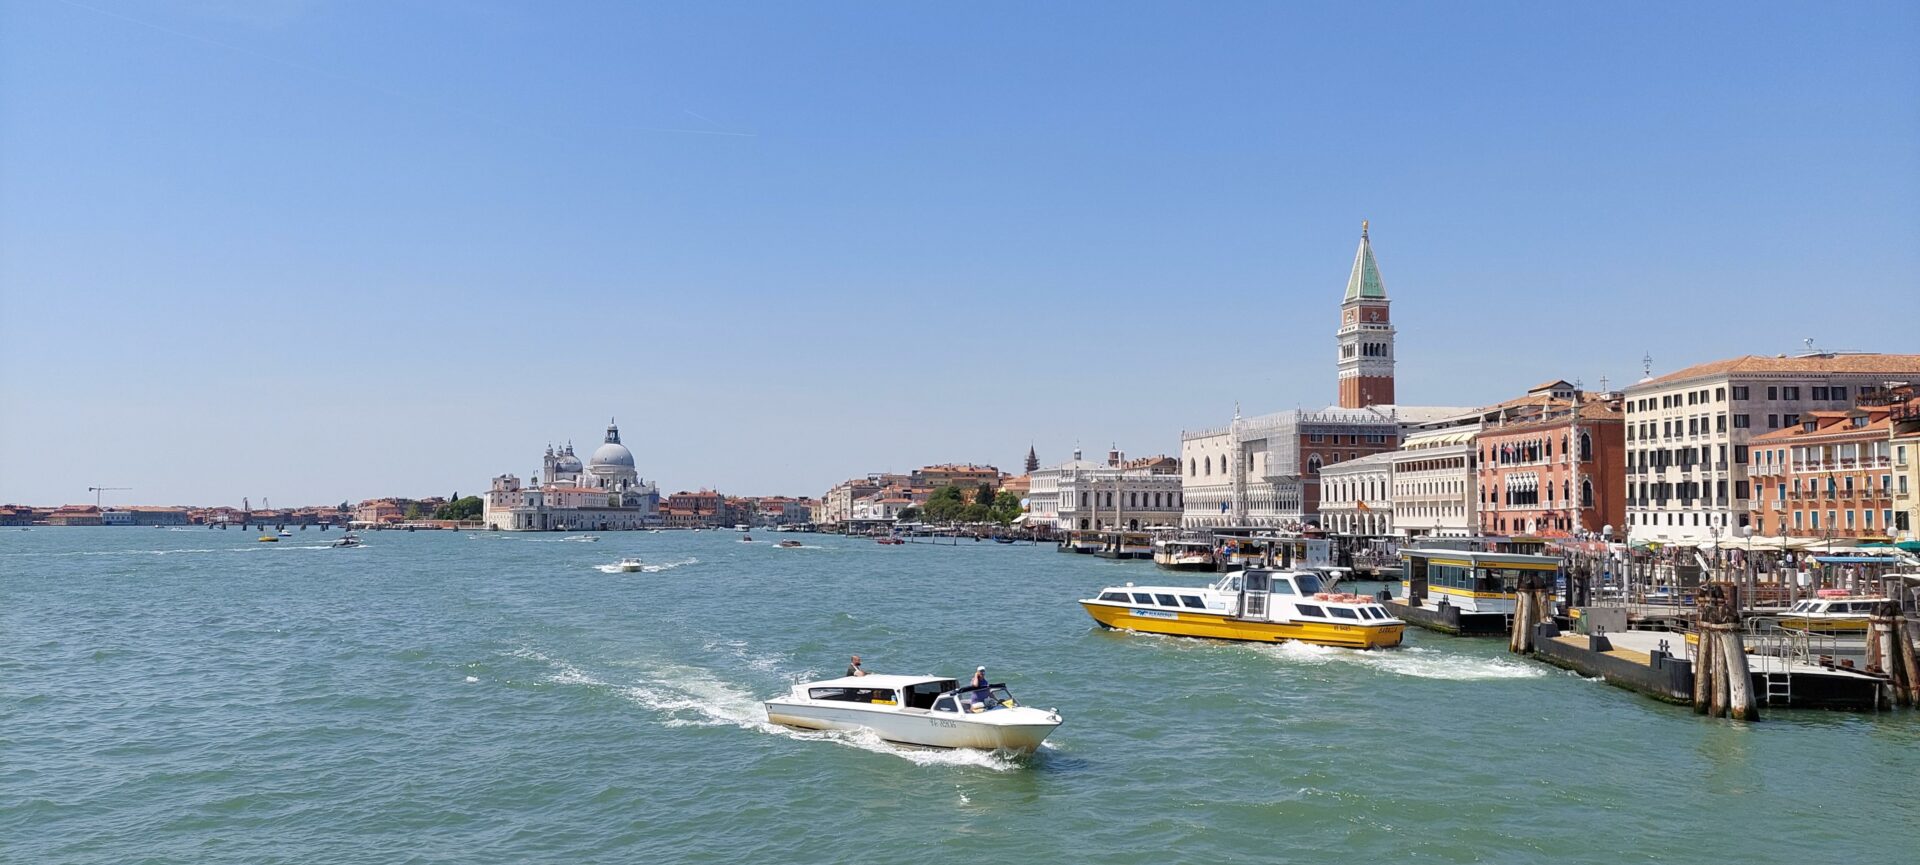 Venice vaporetto Line 1 ACTV - info on ticket prices, timetables